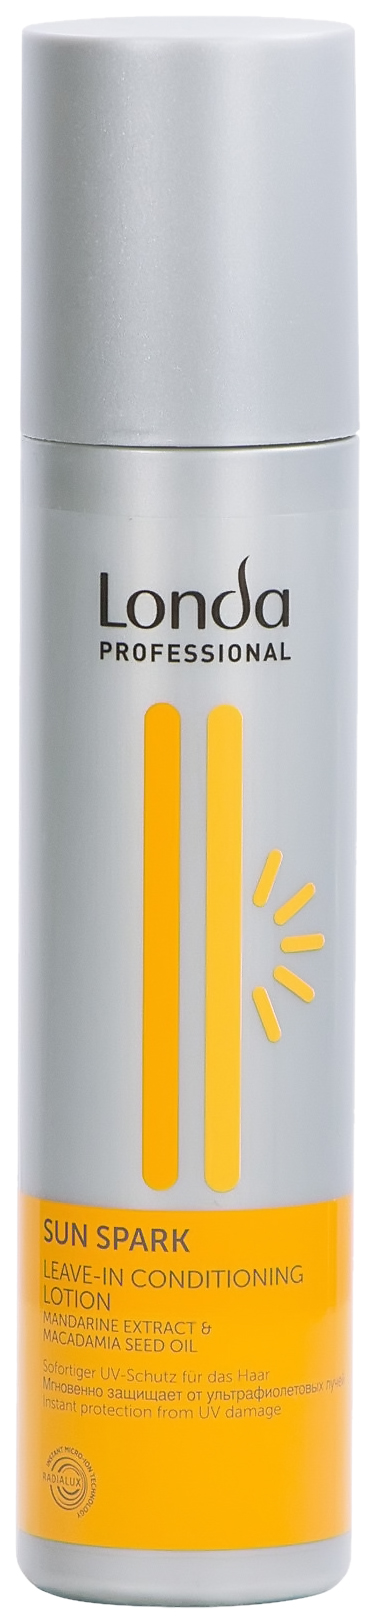 Лосьон-кондиционер Londa Professional Sun spark солнцезащитный солнцезащитный лосьон кондиционер sun spark